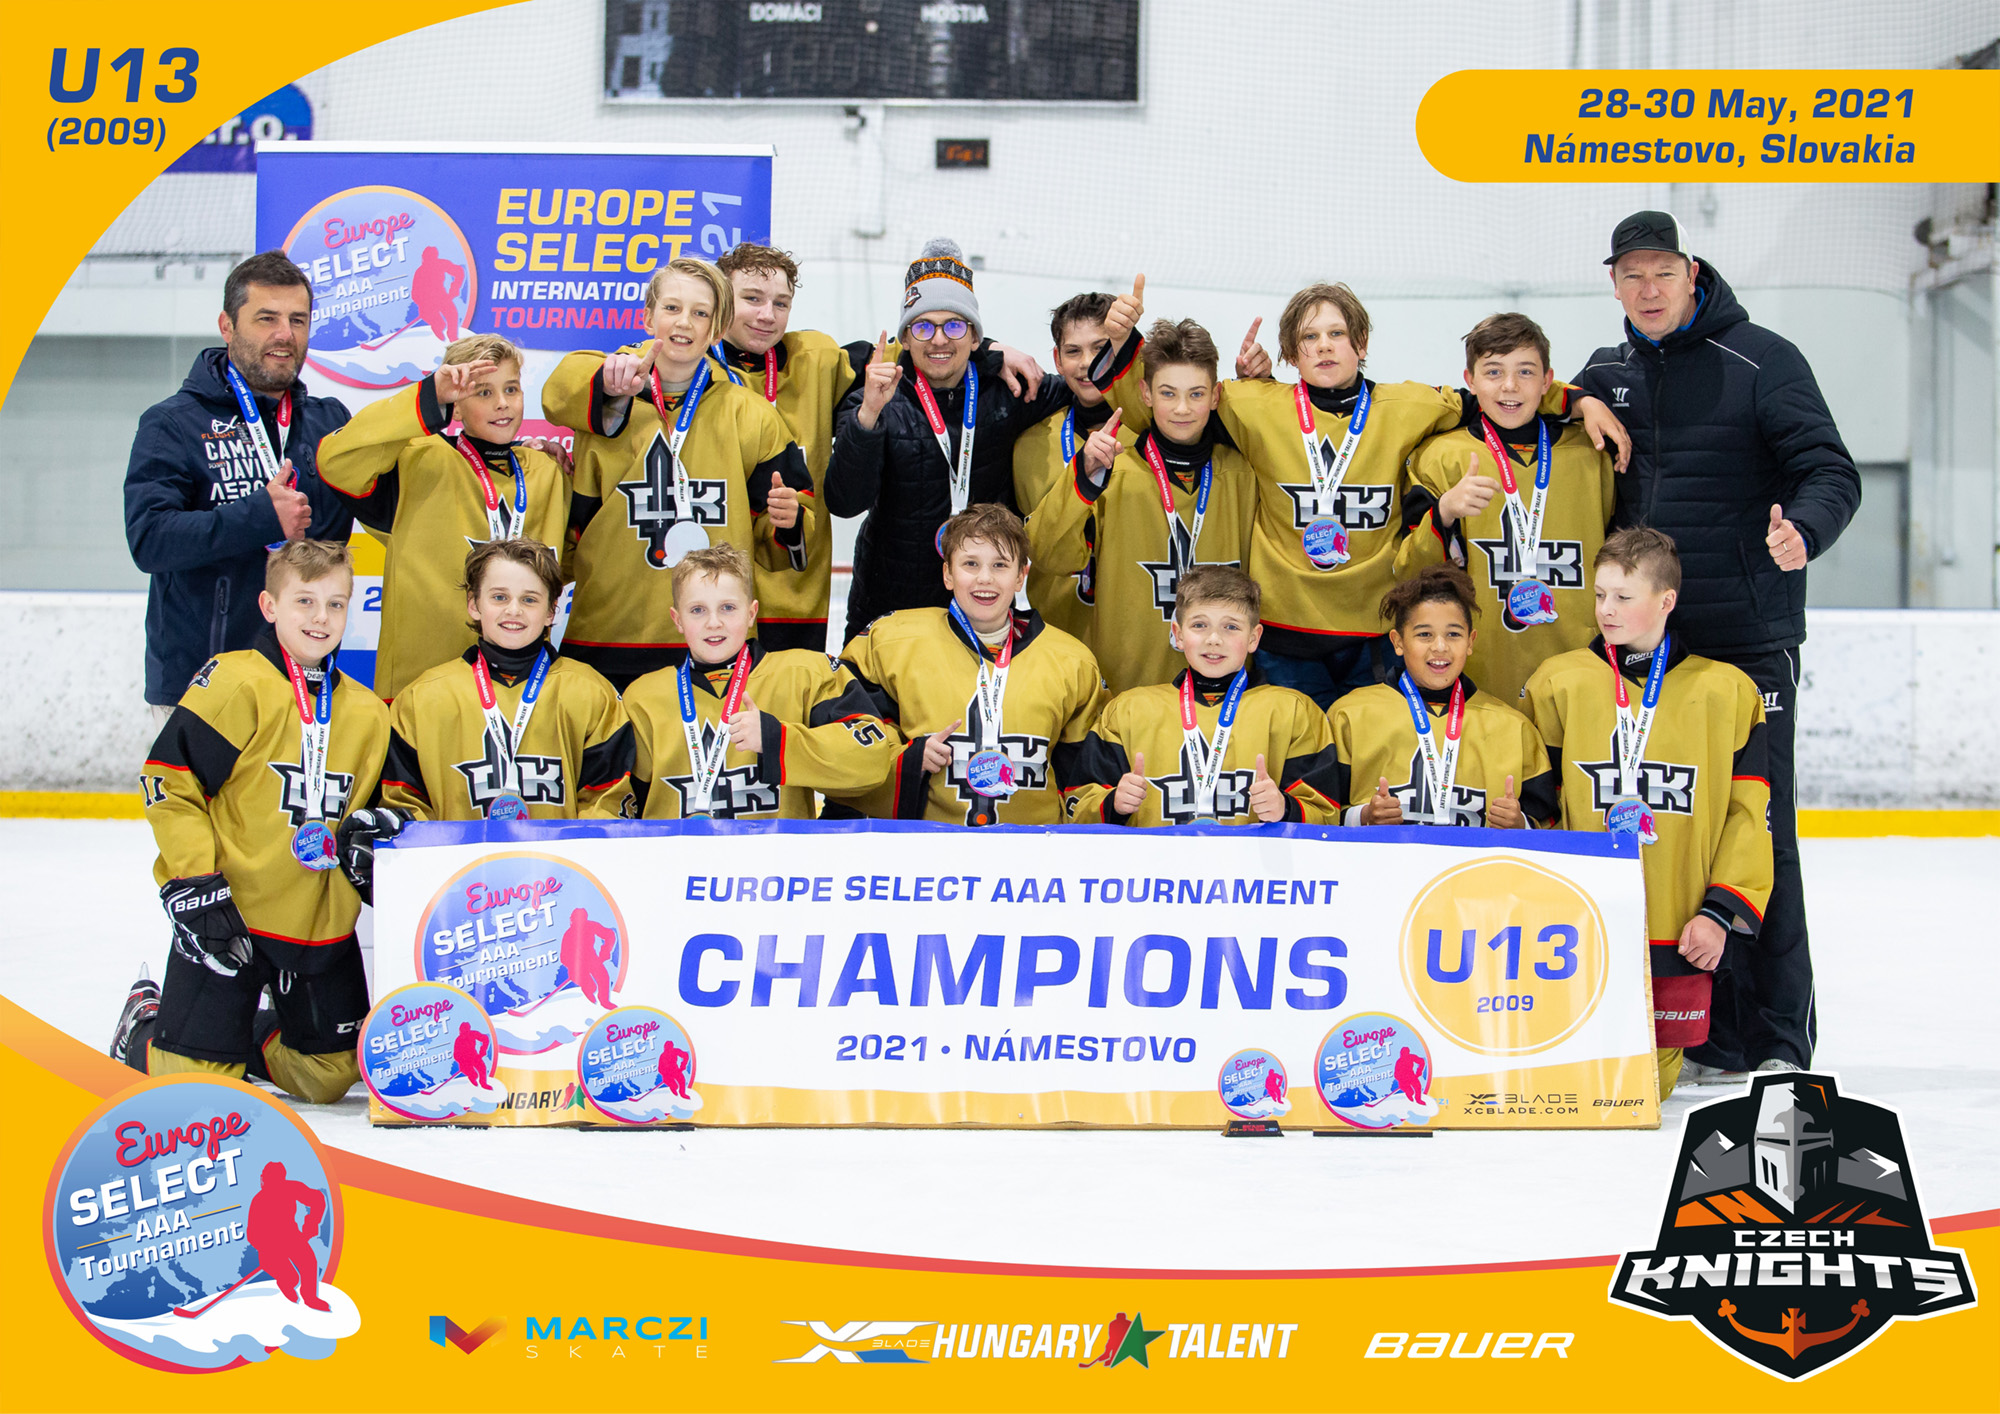 Czech Knights wins the U13 Europe Select Tournament